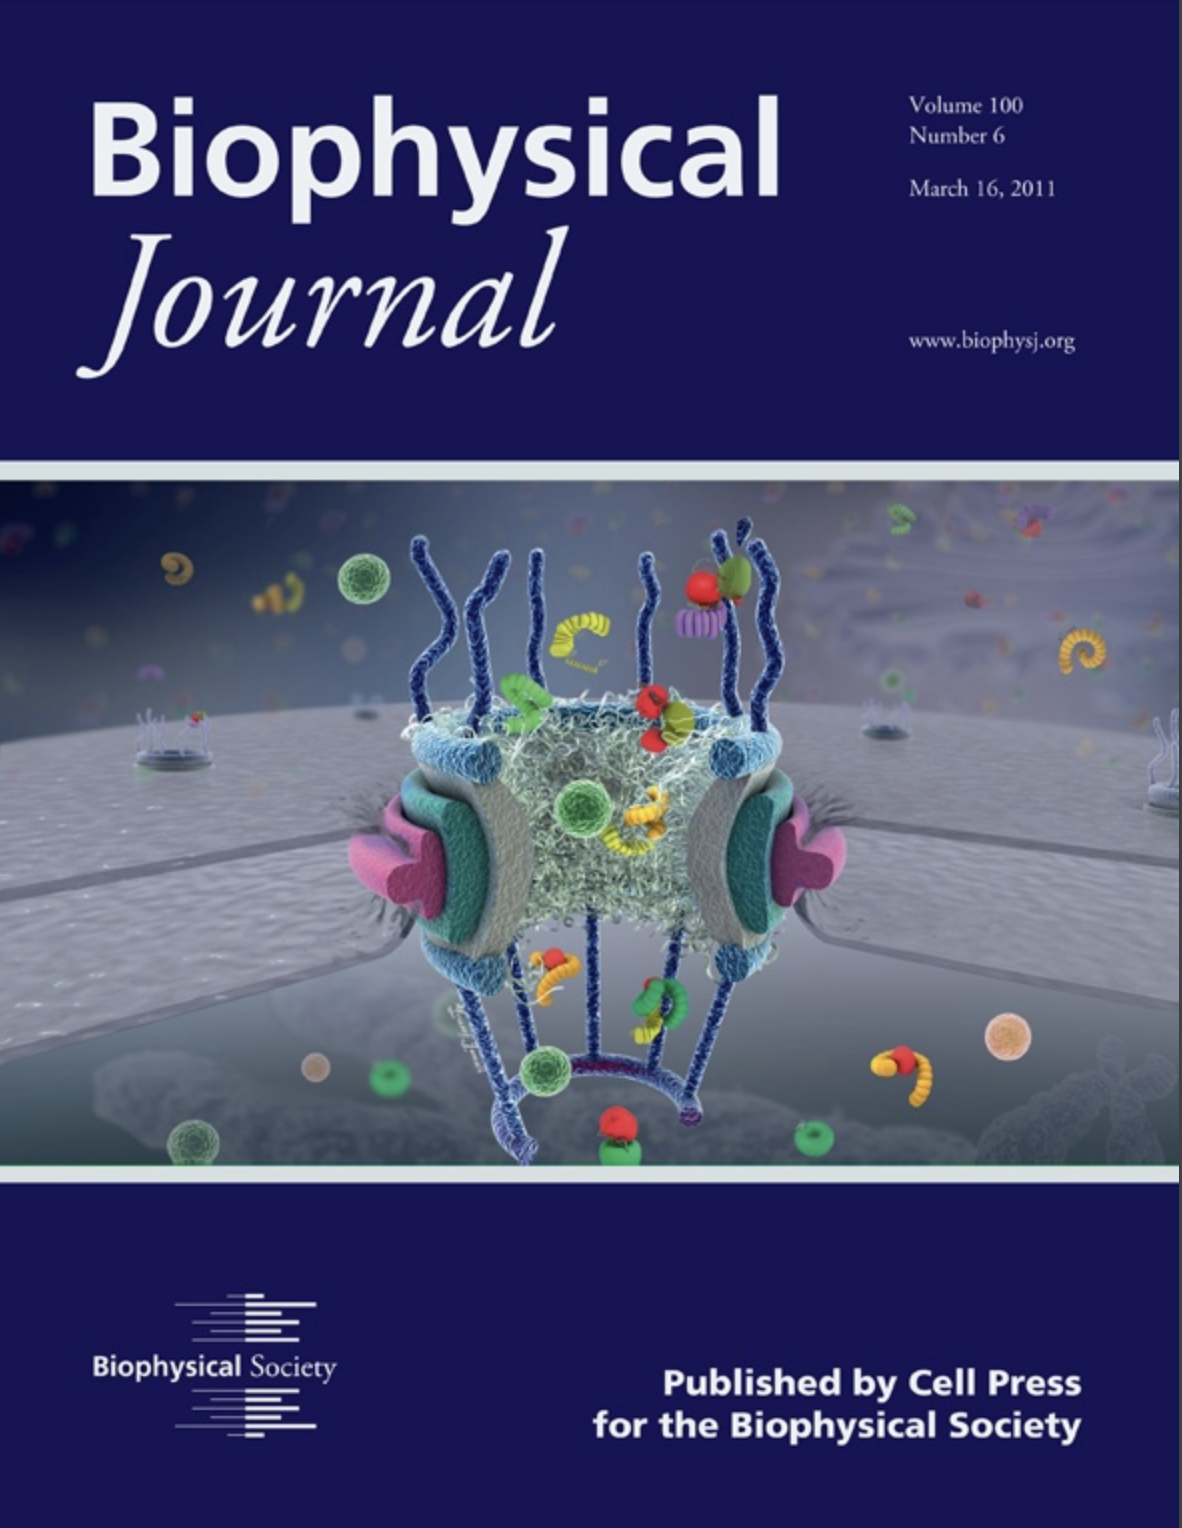 http://biomechanics.berkeley.edu/wp-content/uploads/2019/04/BJ_Cover_NPC2011.png